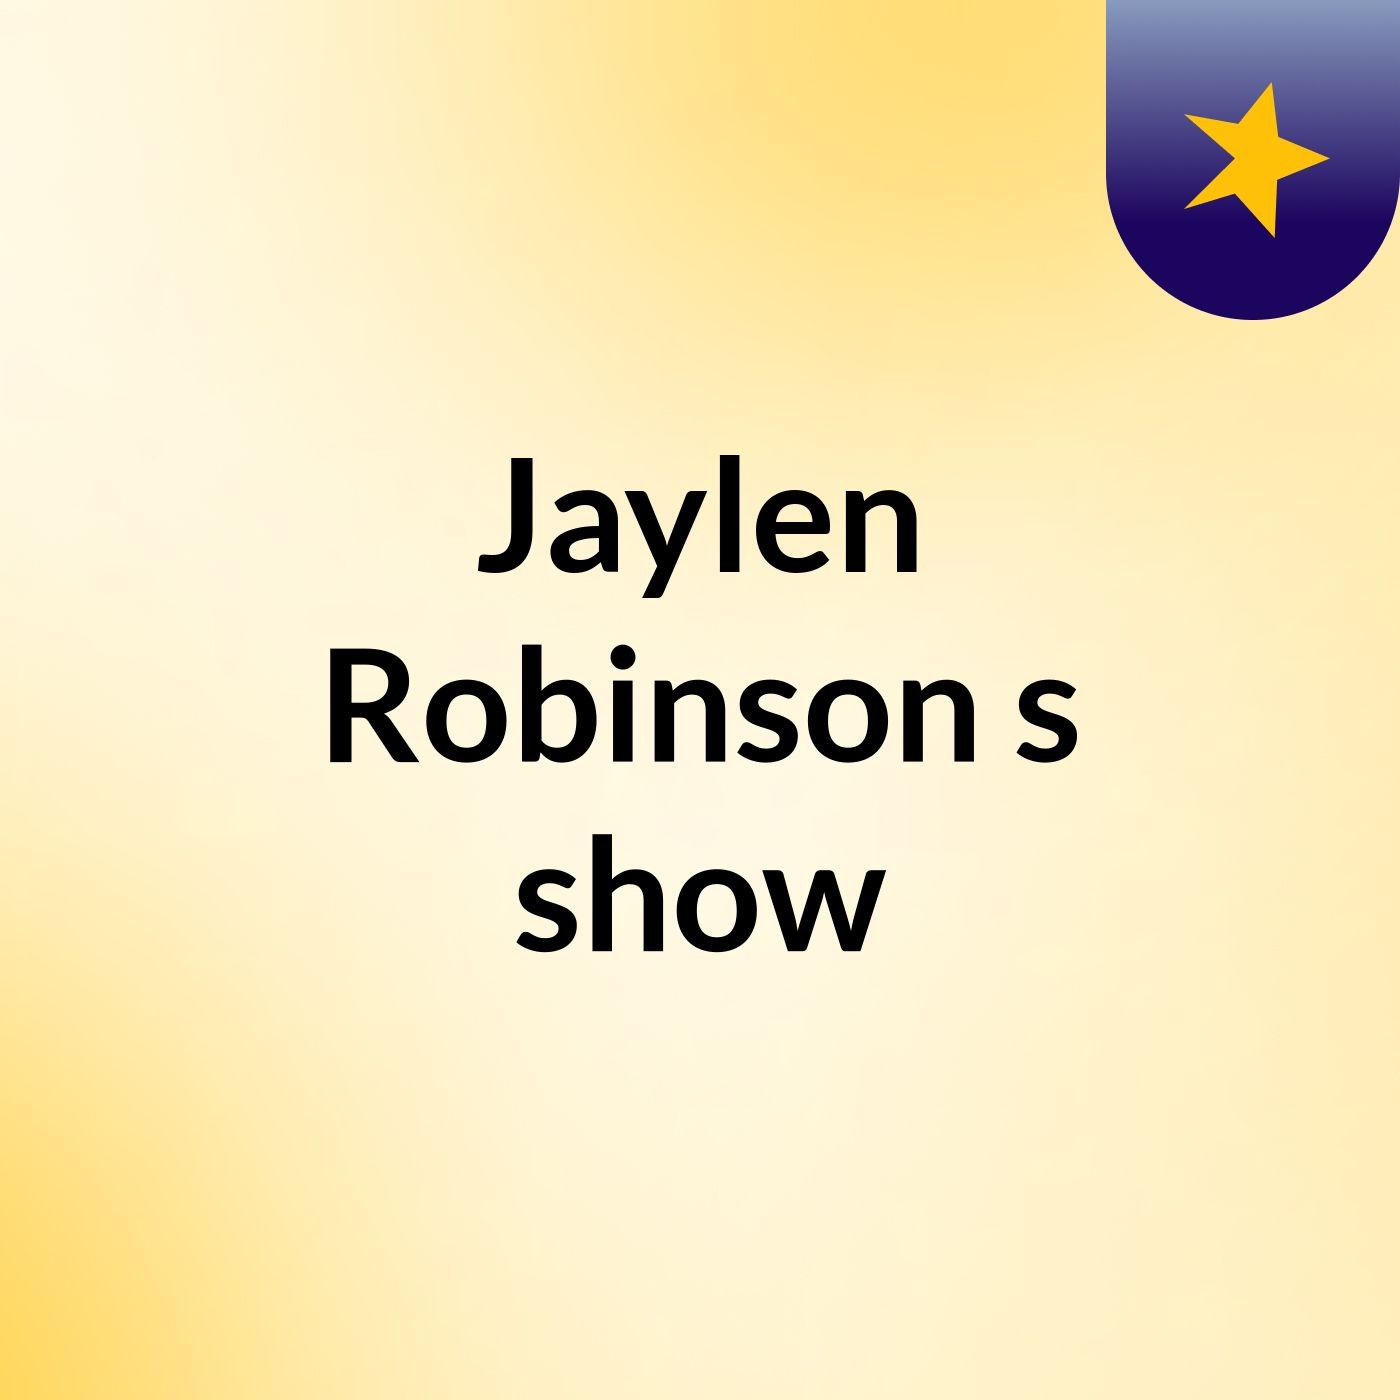 Jaylen Robinson's show